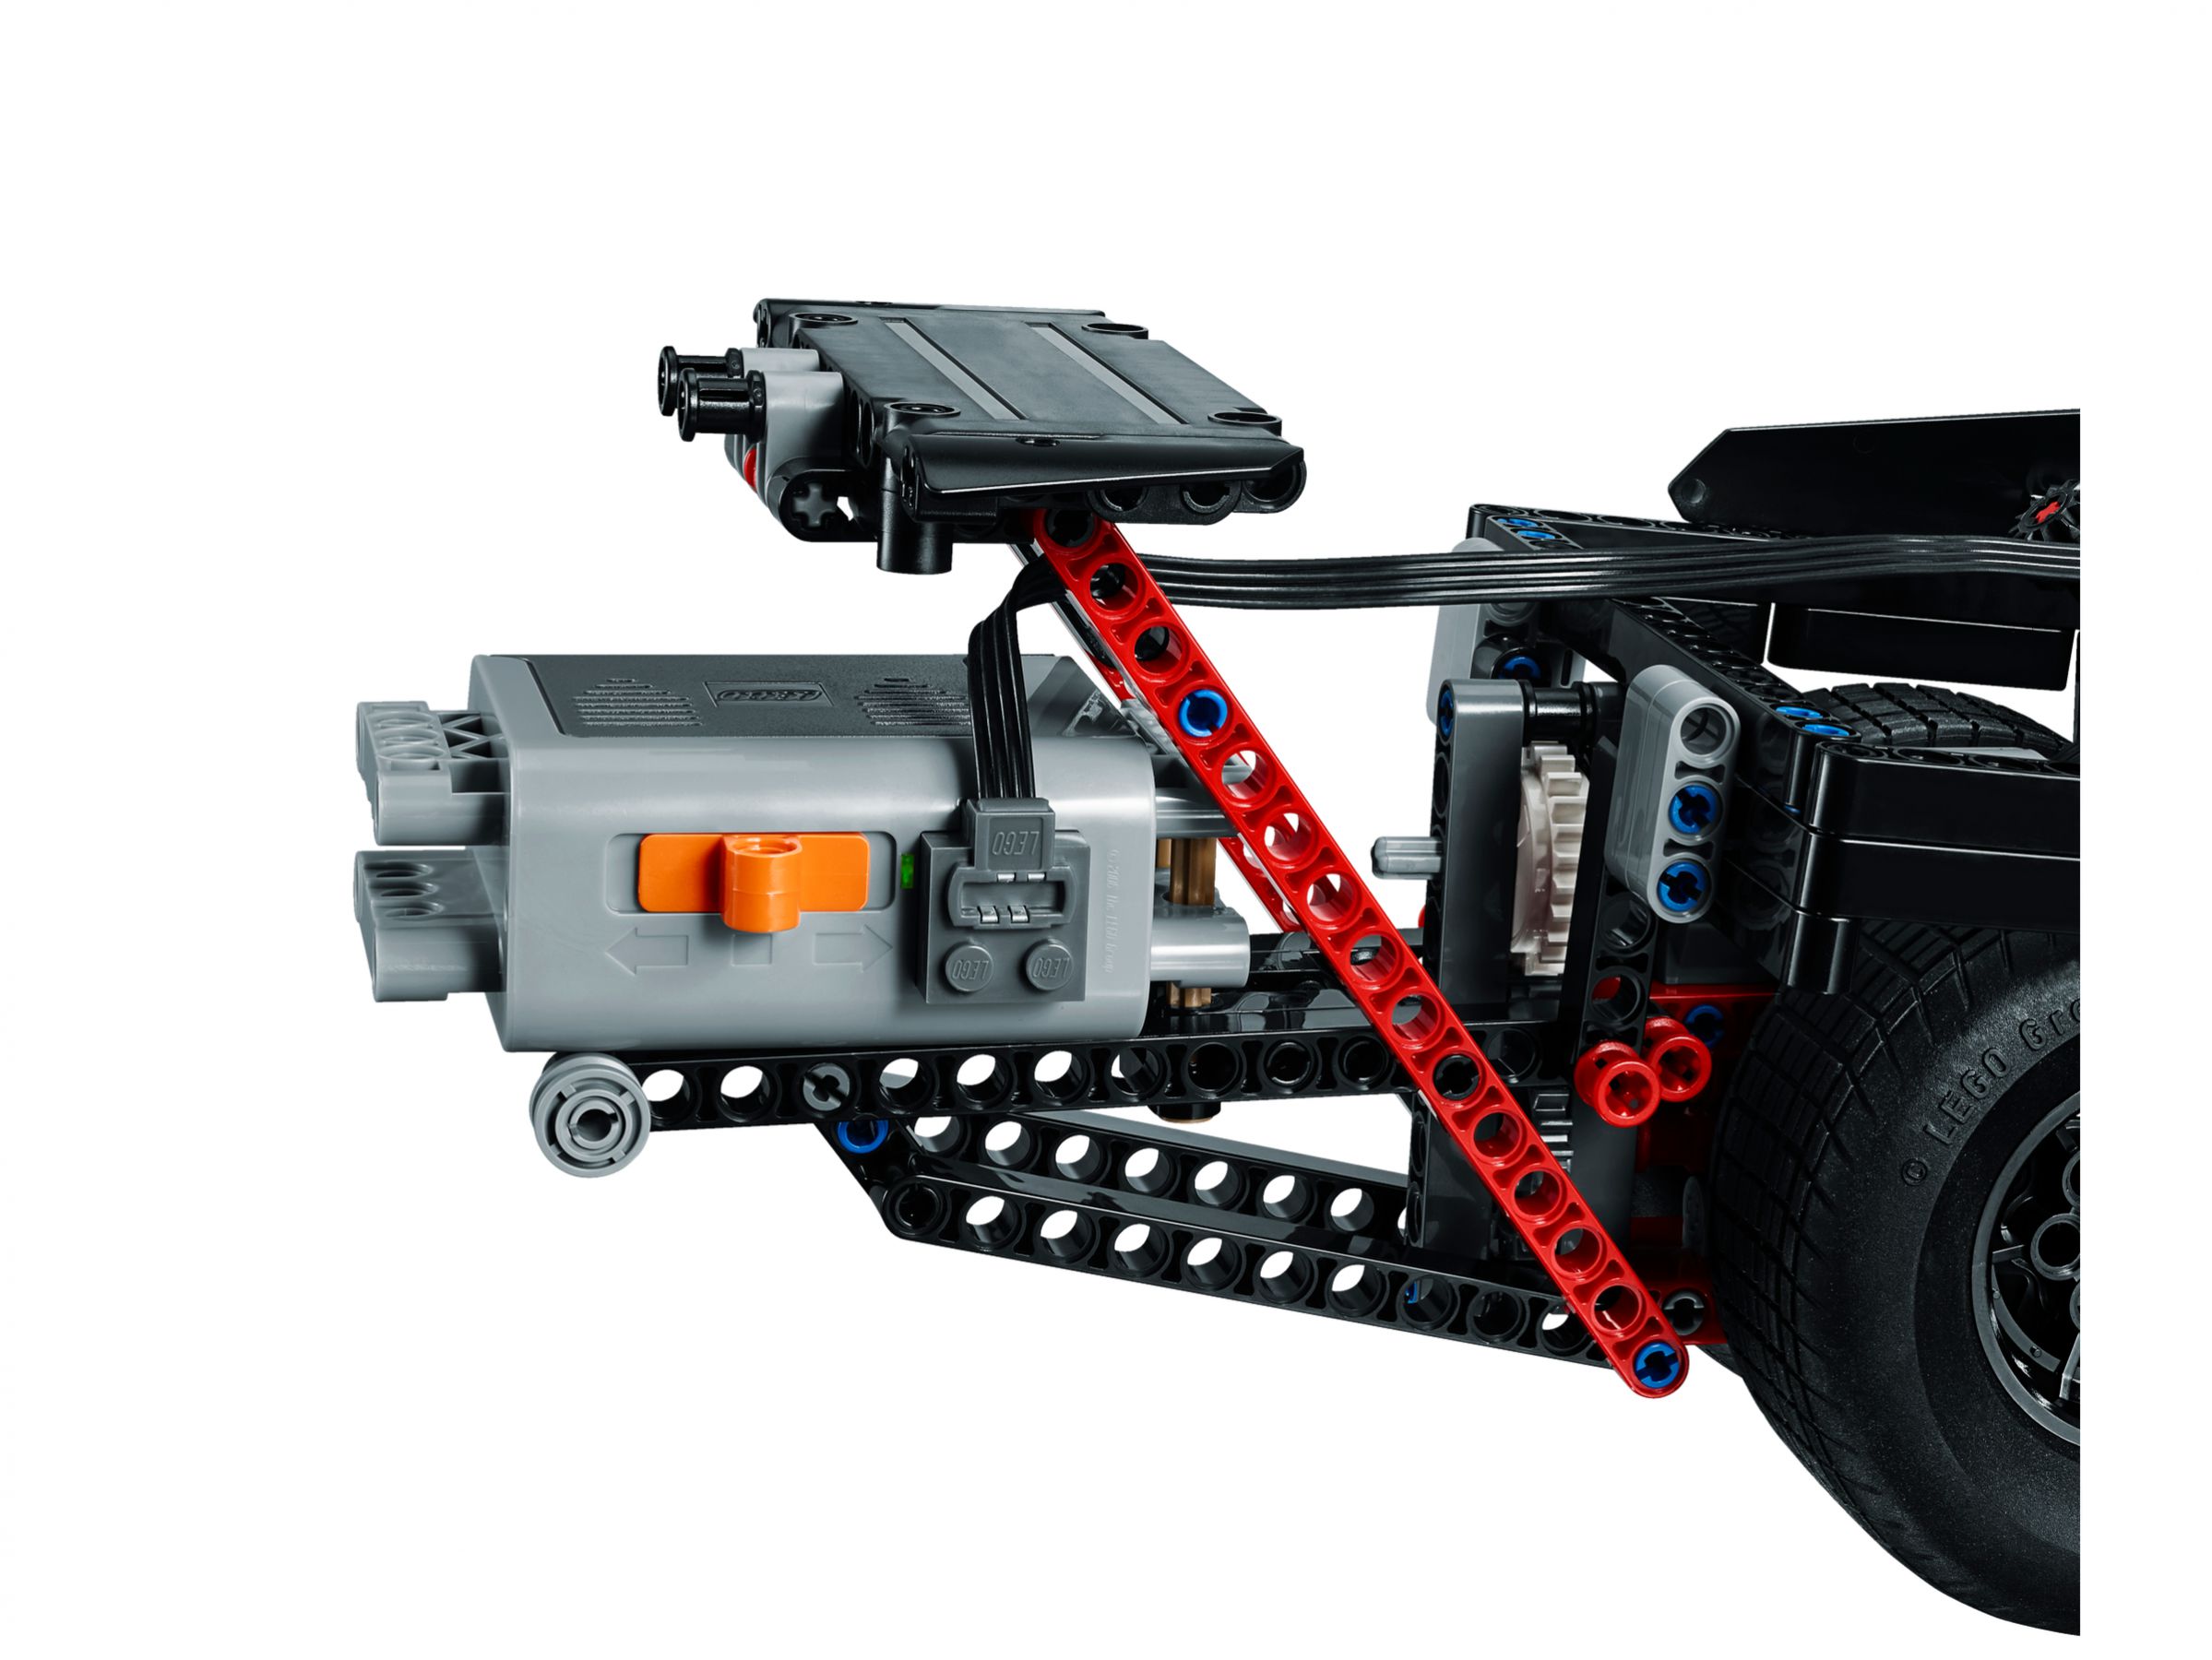 LEGO Technic 42050 Drag Racer LEGO_42050_alt6.jpg